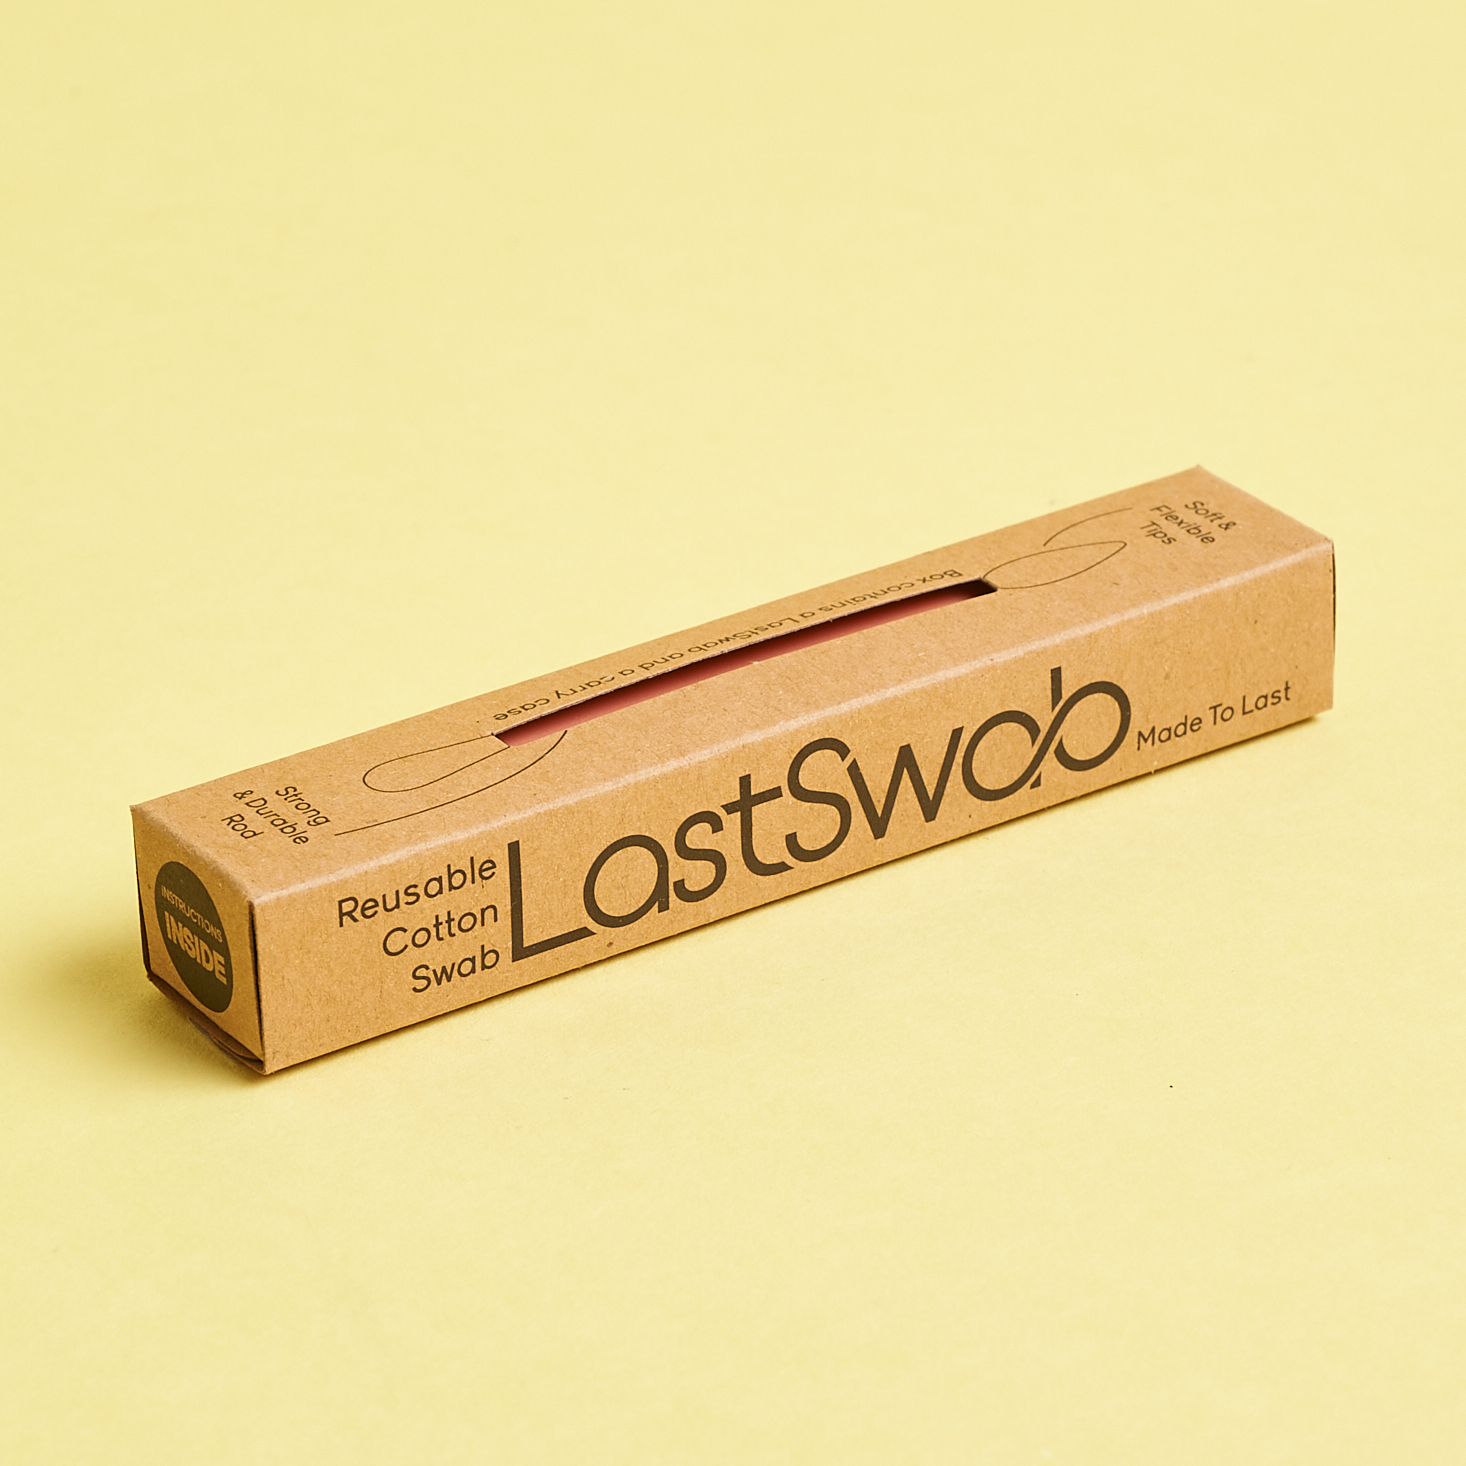 LastSwab beauty swab box